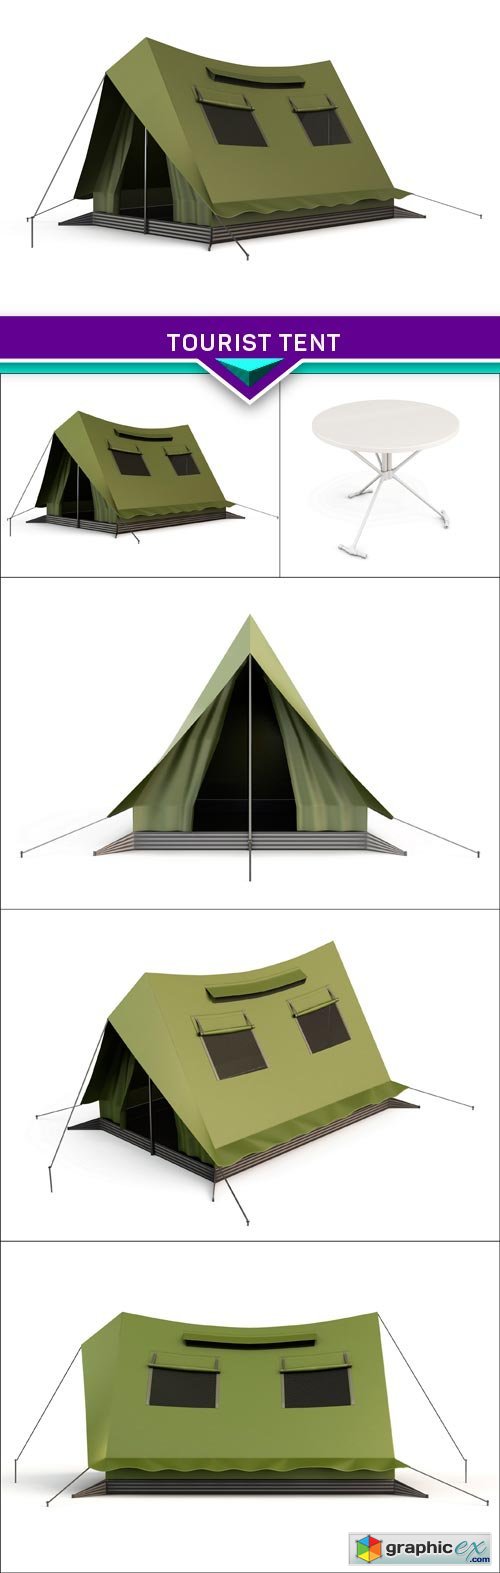 Tourist tent 5x JPEG